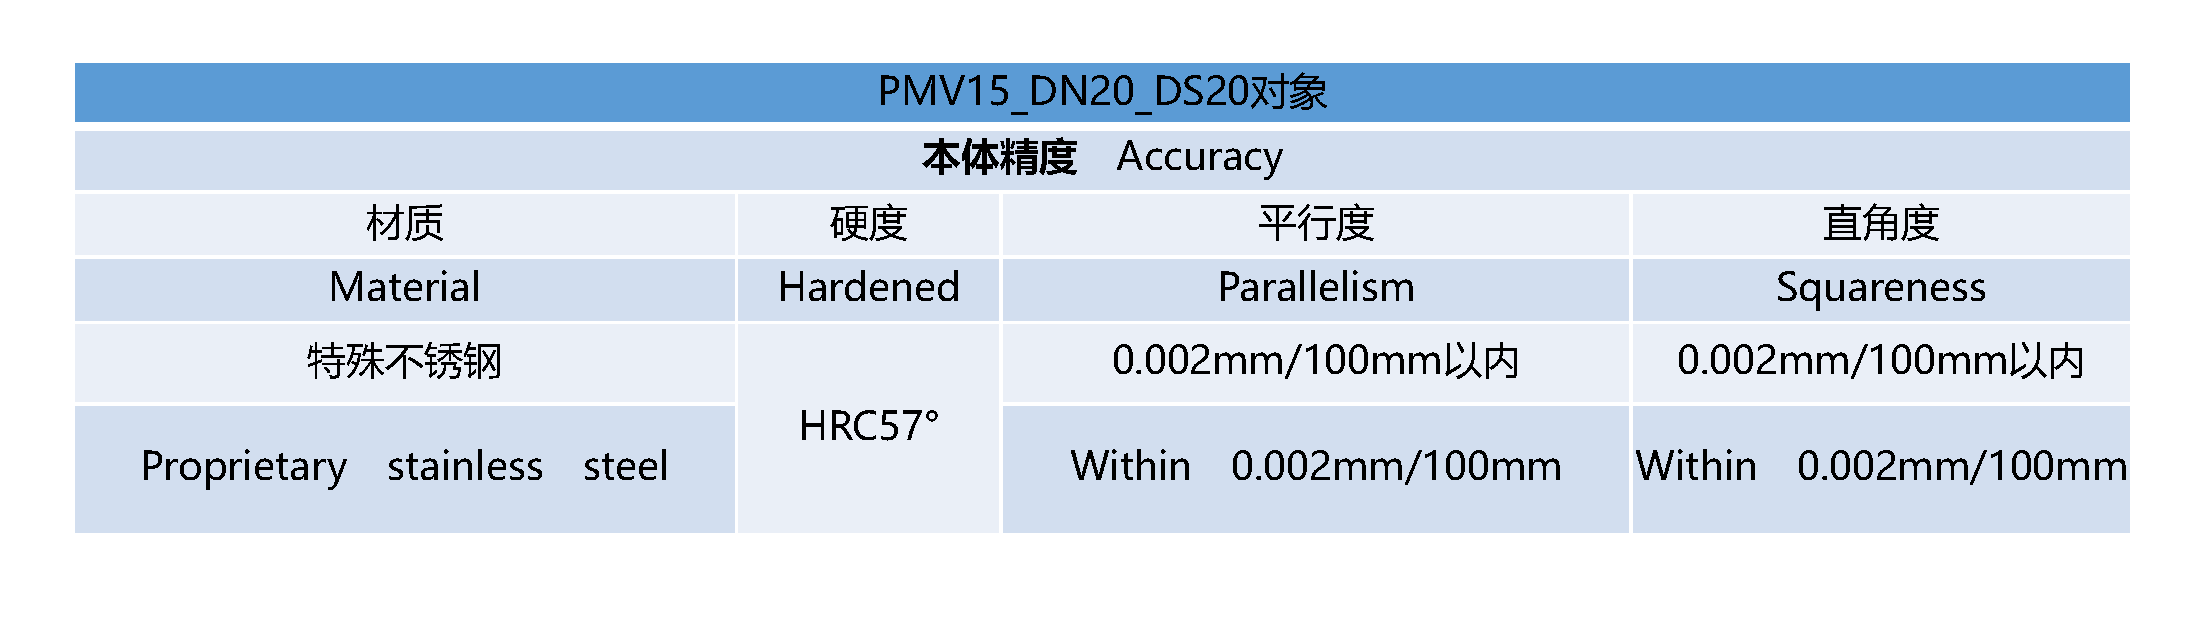 PMV15_DN20_DS20_精度表- 中文.png